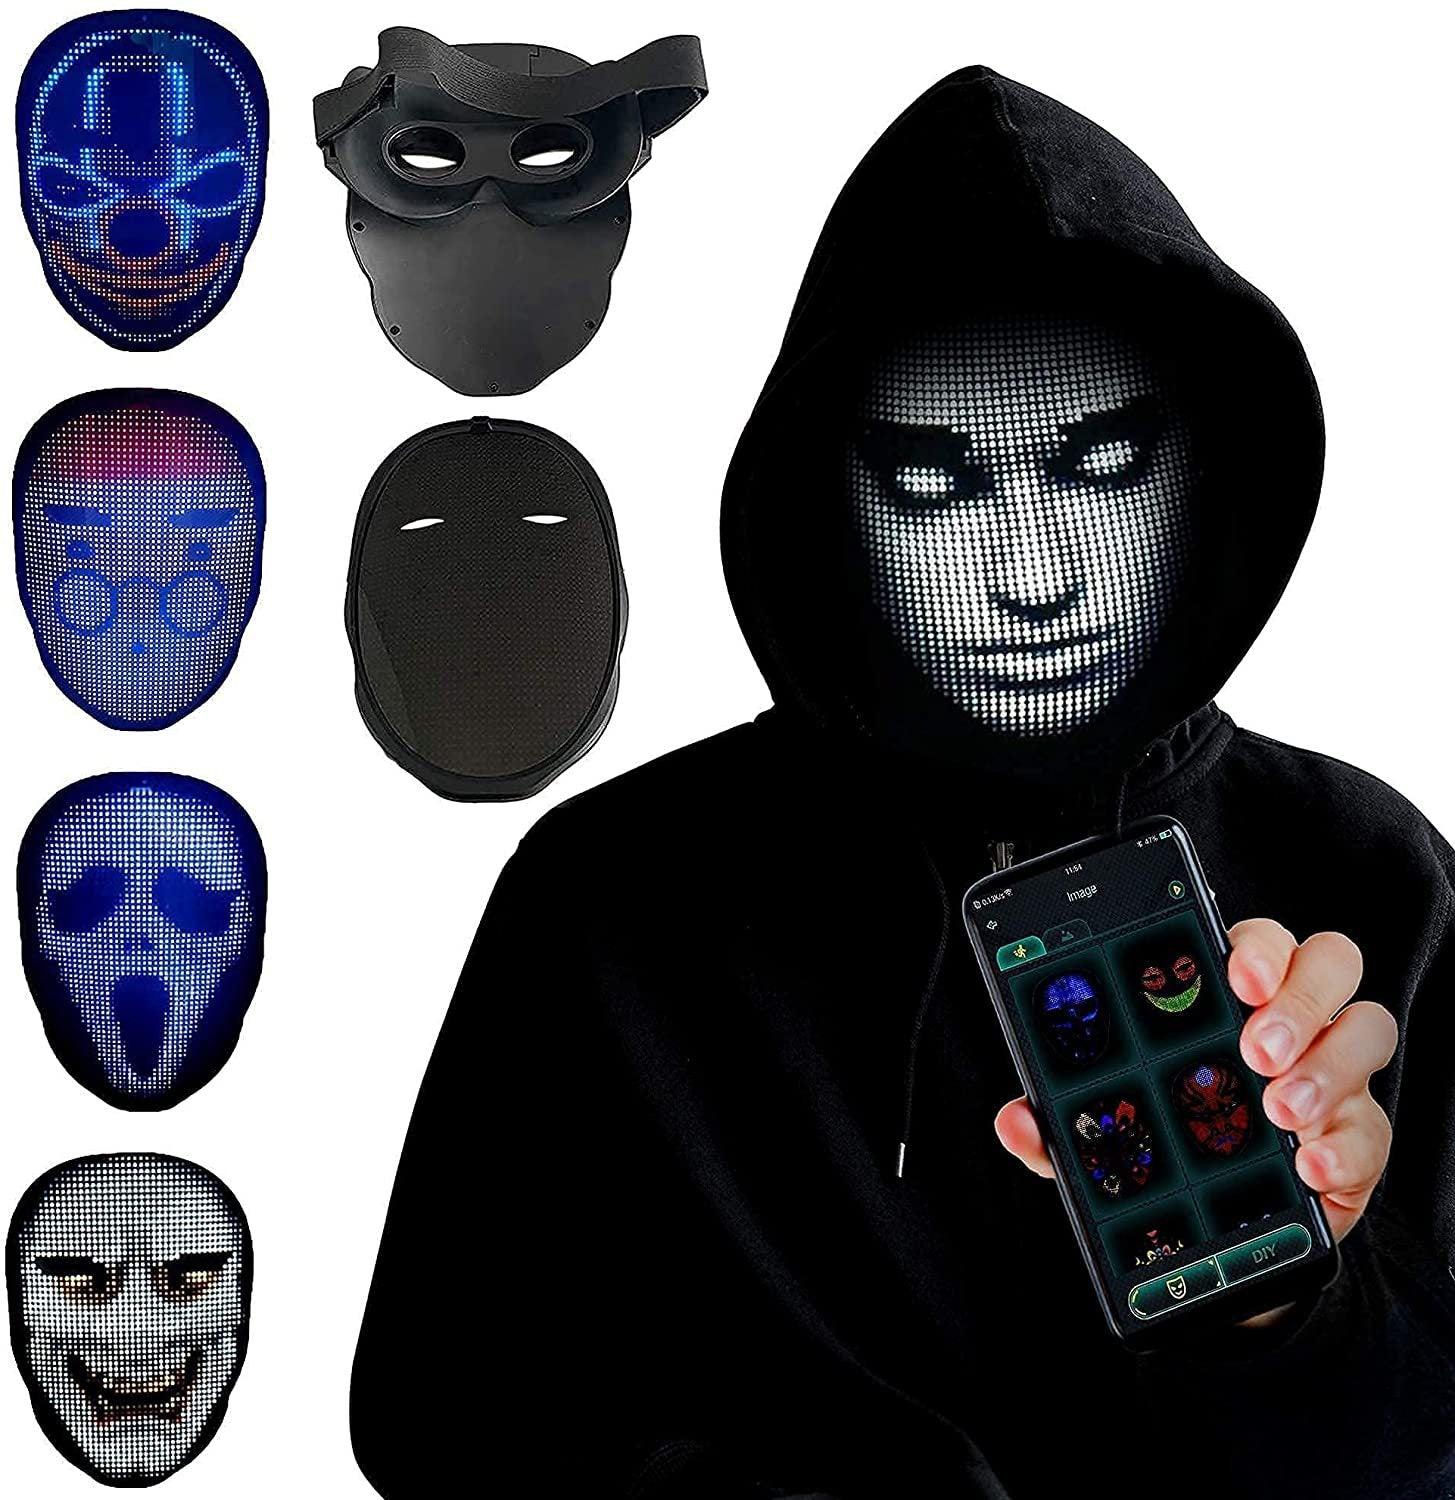 Full LED Face Mask for Halloween - TechGadgetsClub